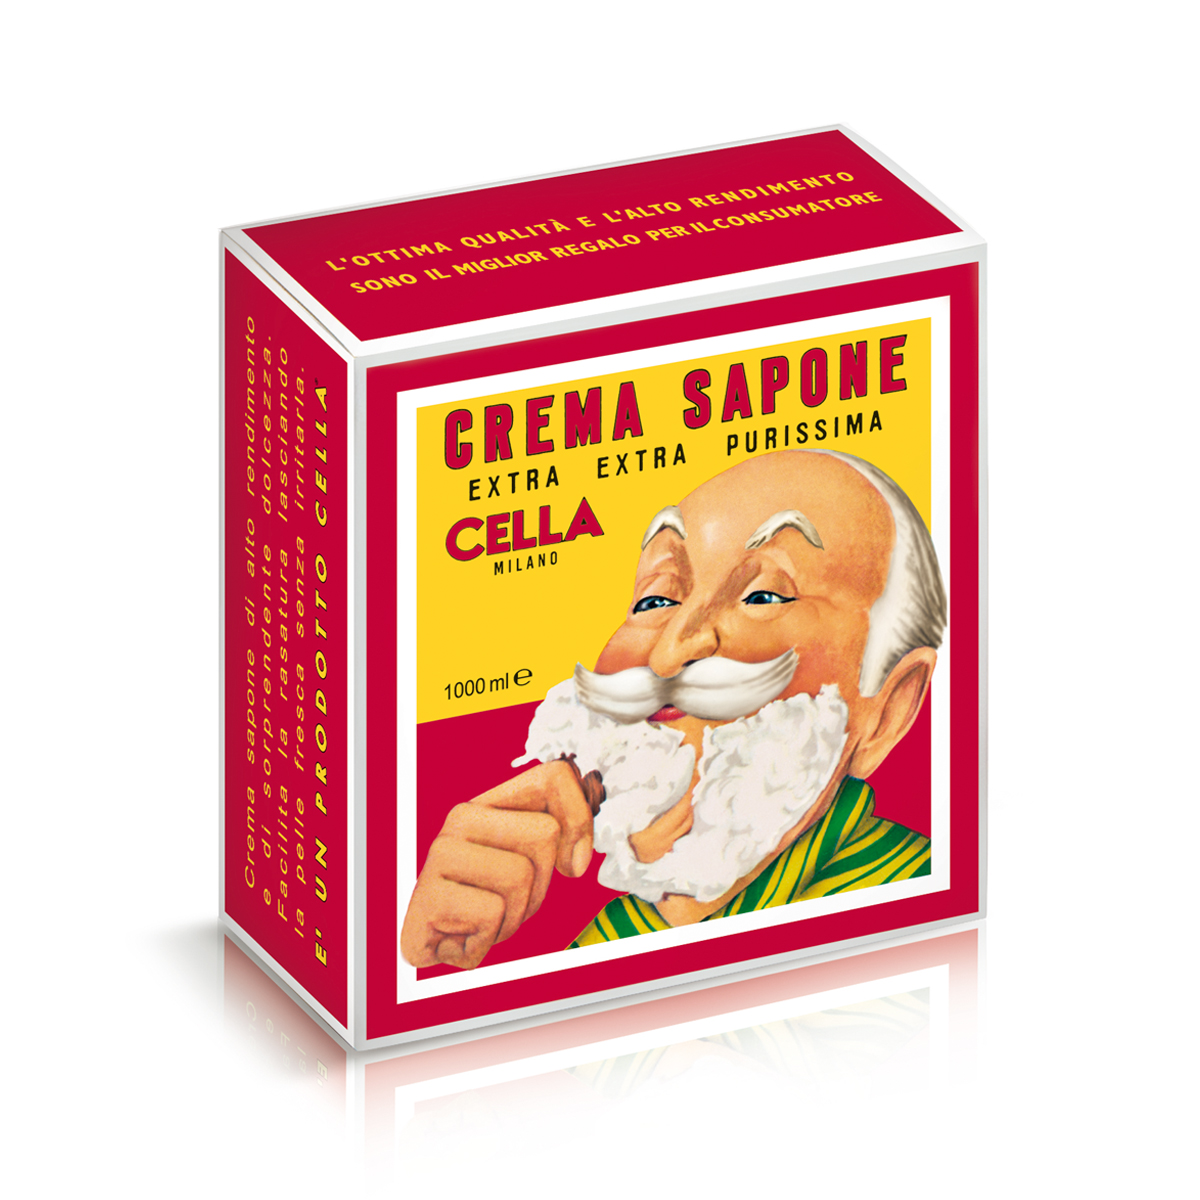 Crema Sapone Extra Extra Purissima Scatola